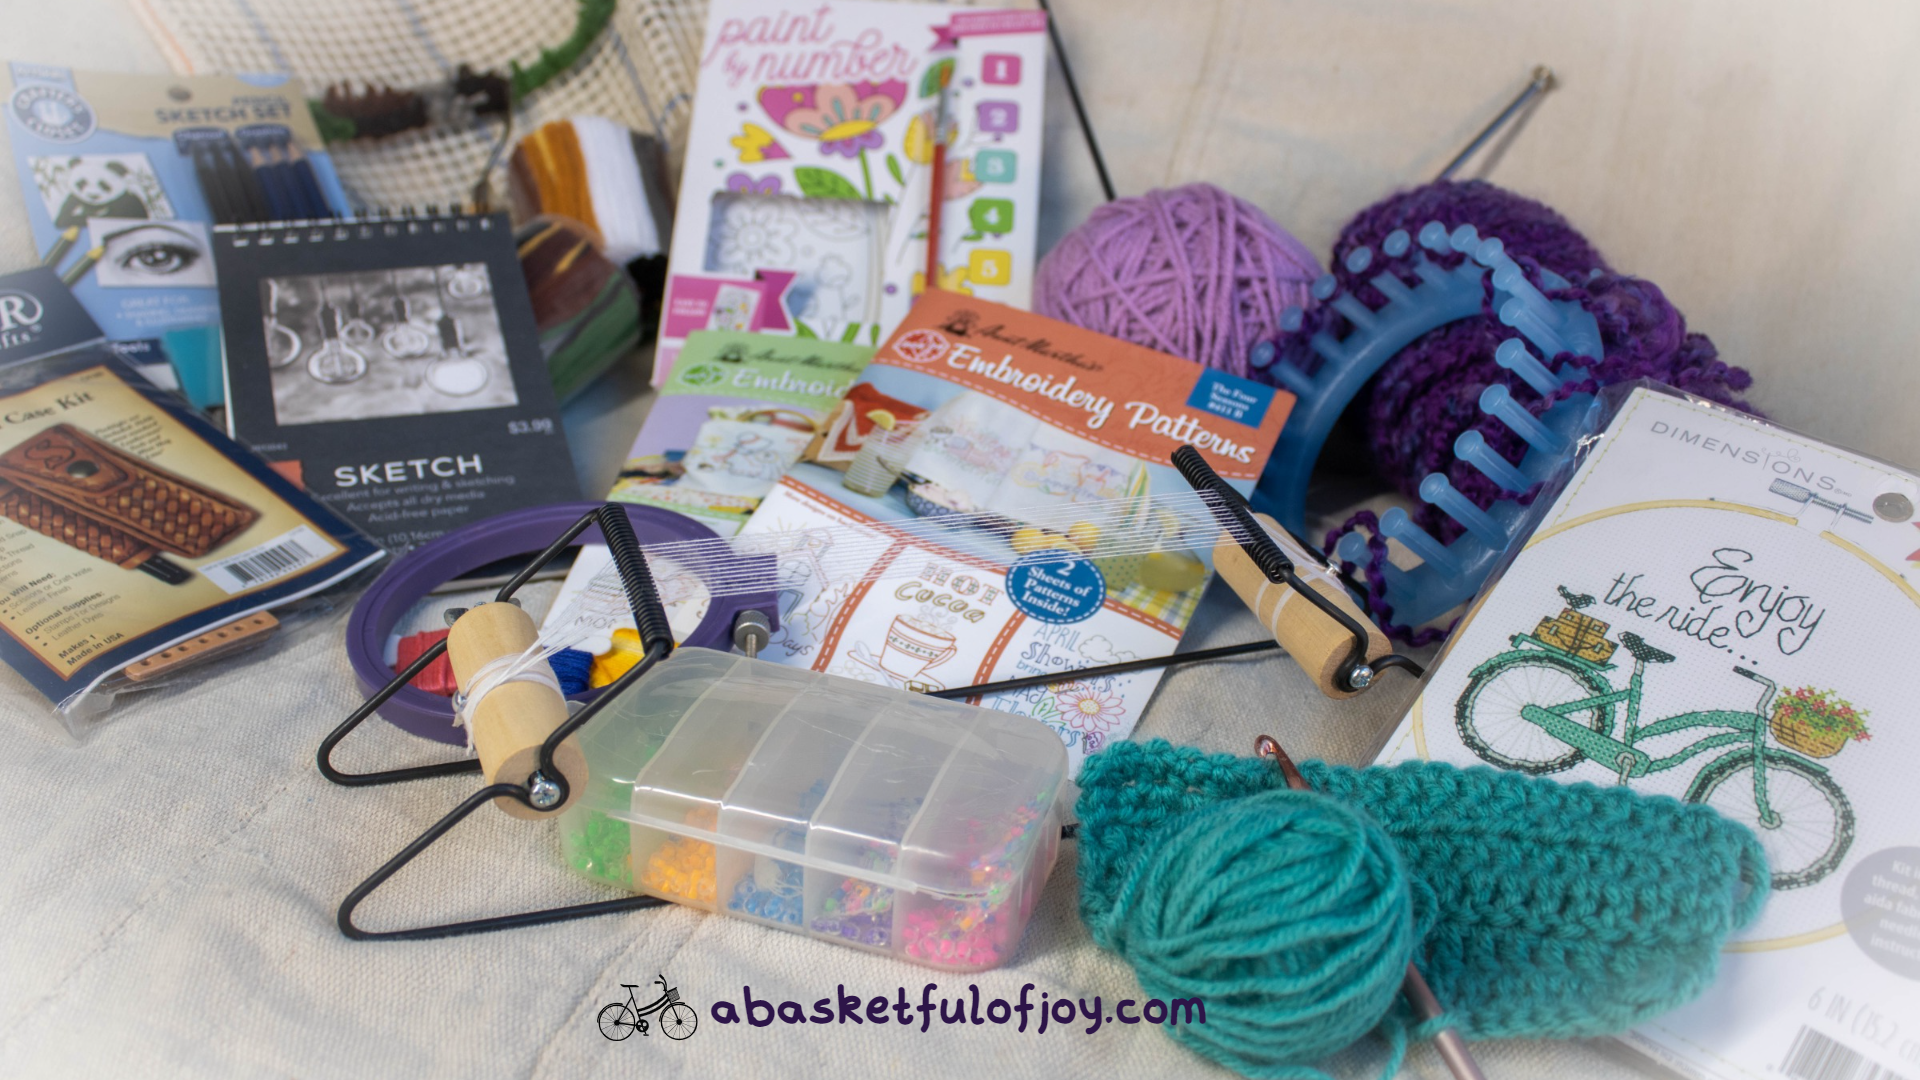 Heart Wooden Basket Weaving Kits (Pack of 2) Sewing & Weaving Kits